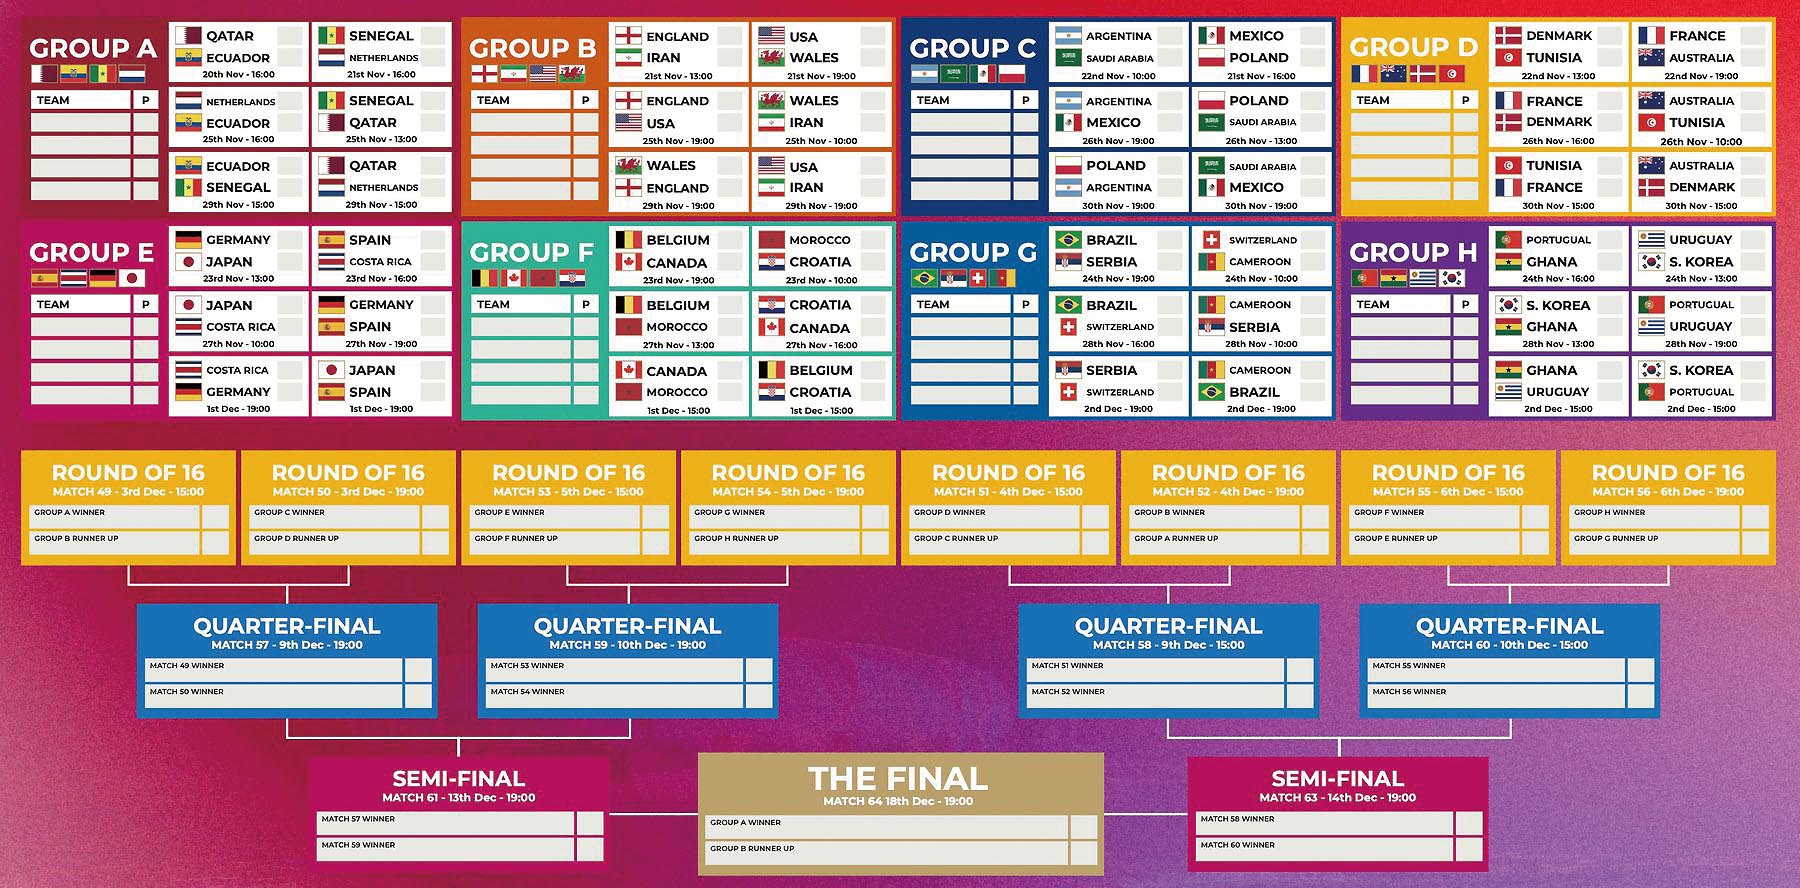 world cup schedule 2022